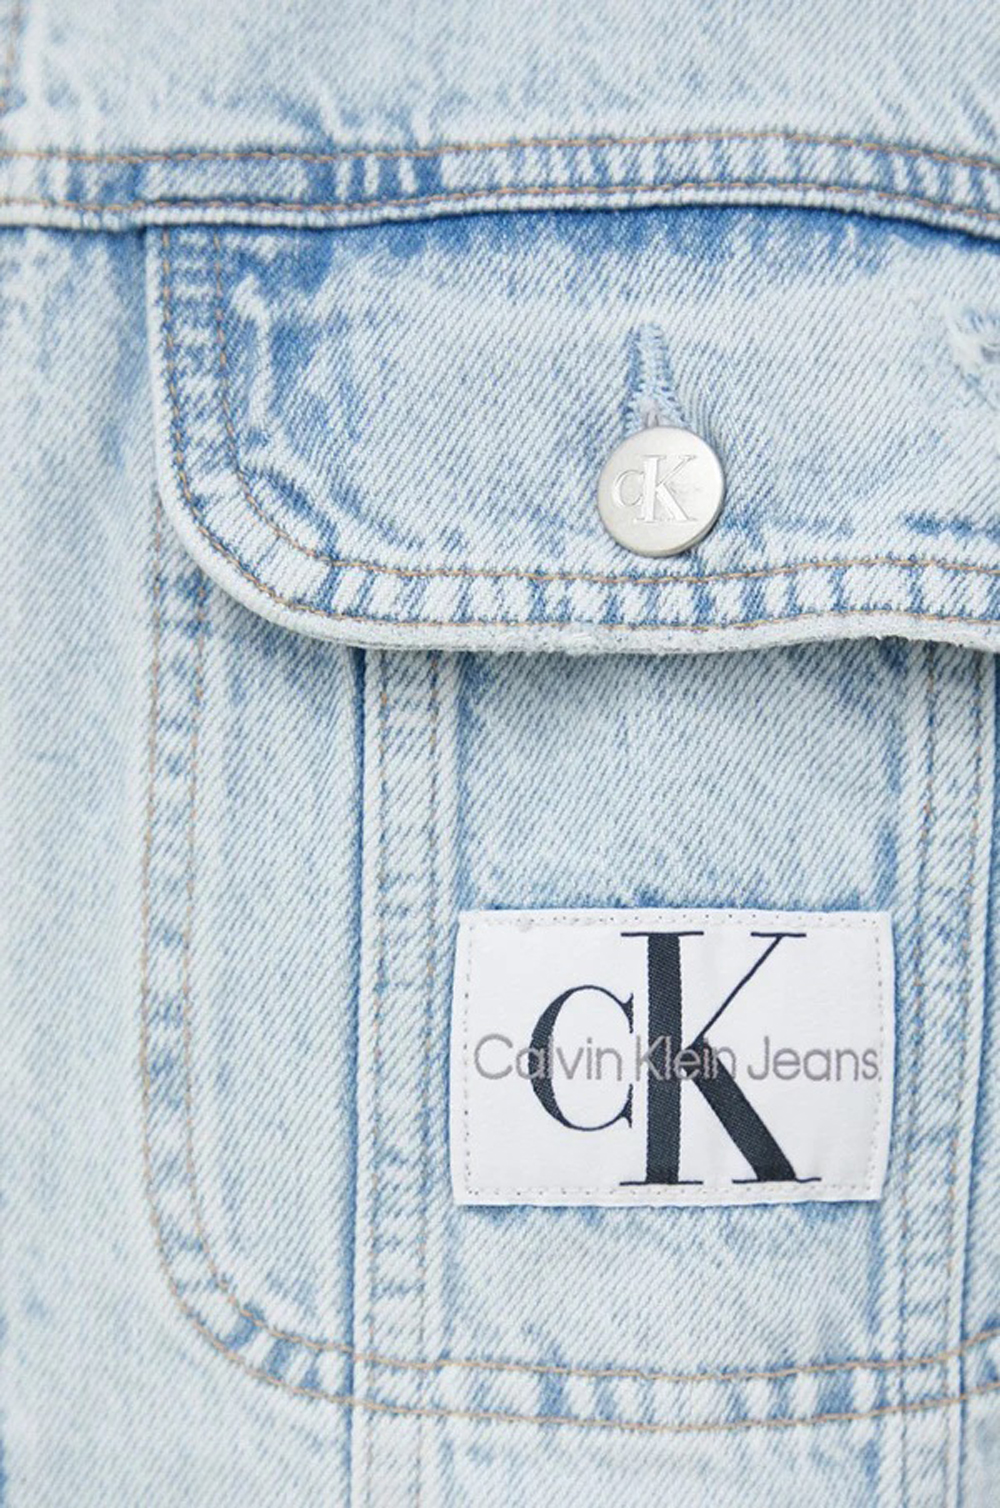 Giacchetto Calvin Klein Jeans REGULAR 90s DENIM JA Denim chiaro - Foto 2